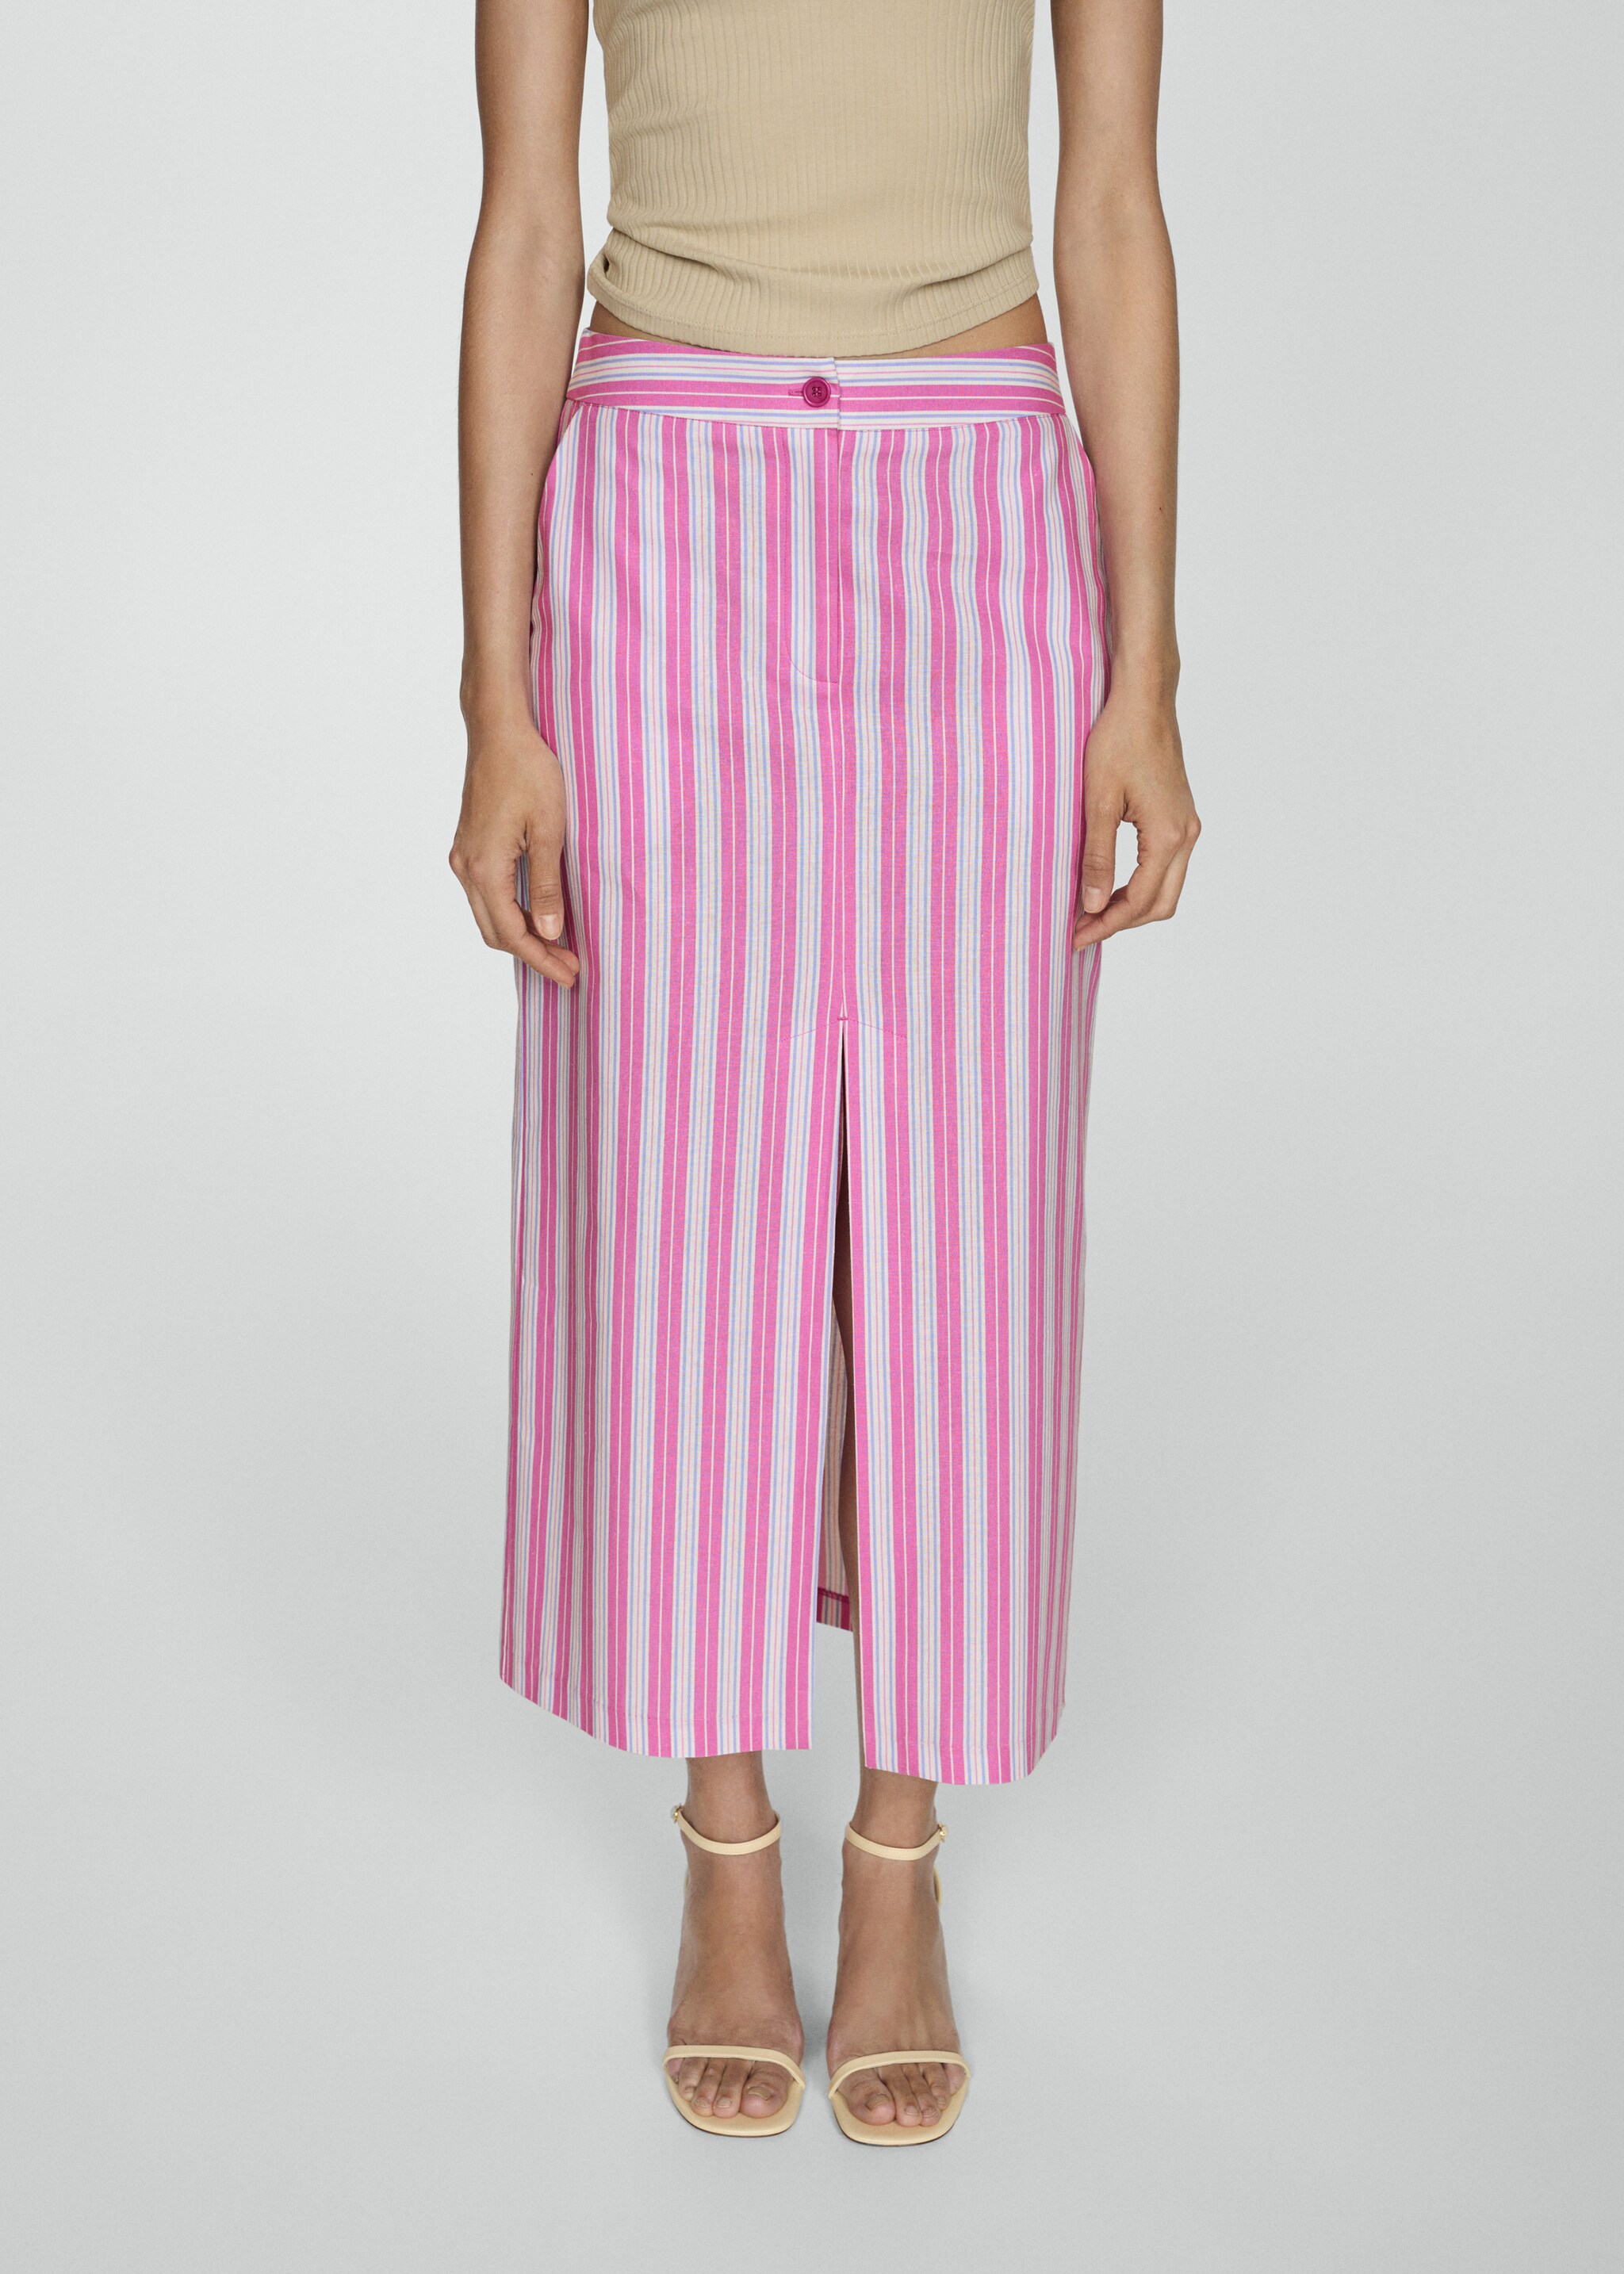 Slit striped skirt - Medium plane